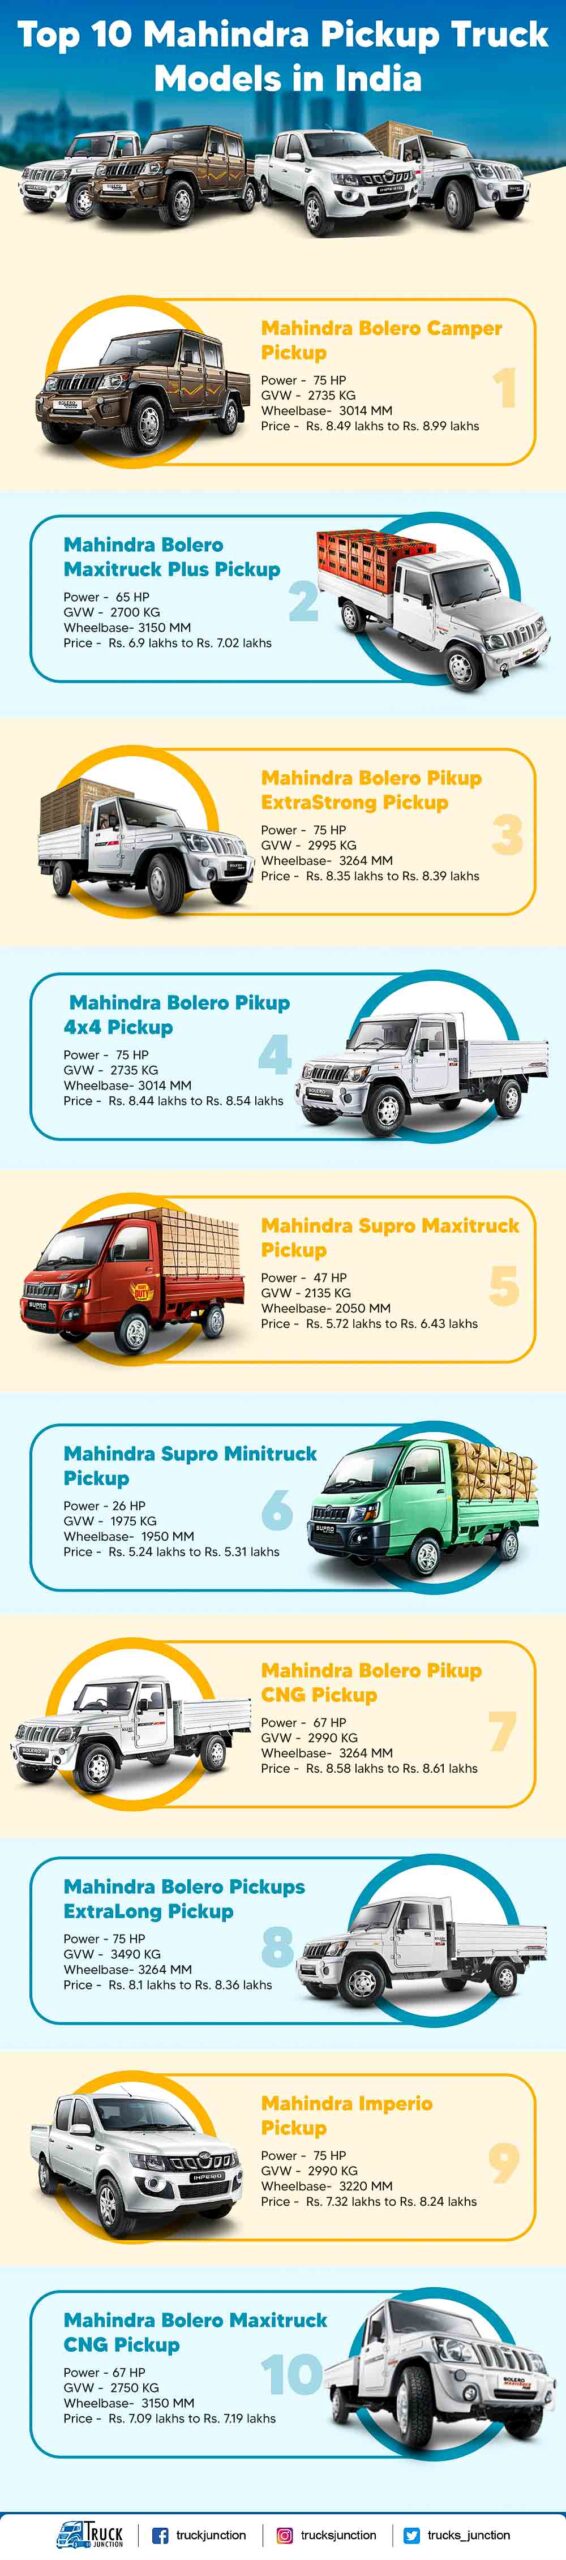 Top 10 Mahindra Pickup Truck Models Infographic